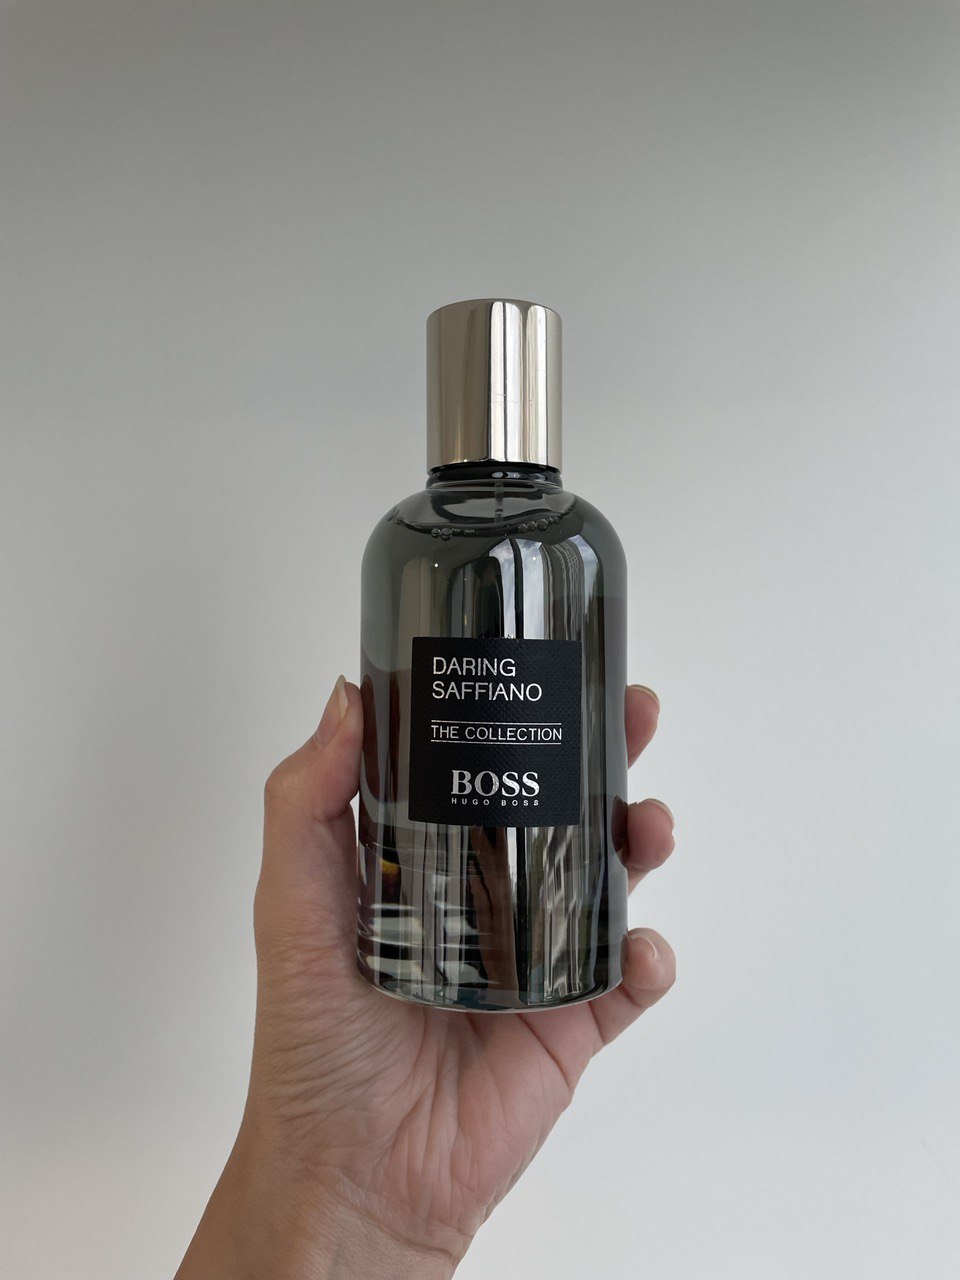 HUGO BOSS DARING SAFFIANO THE COLLECTION EDP 100ML – Perfume